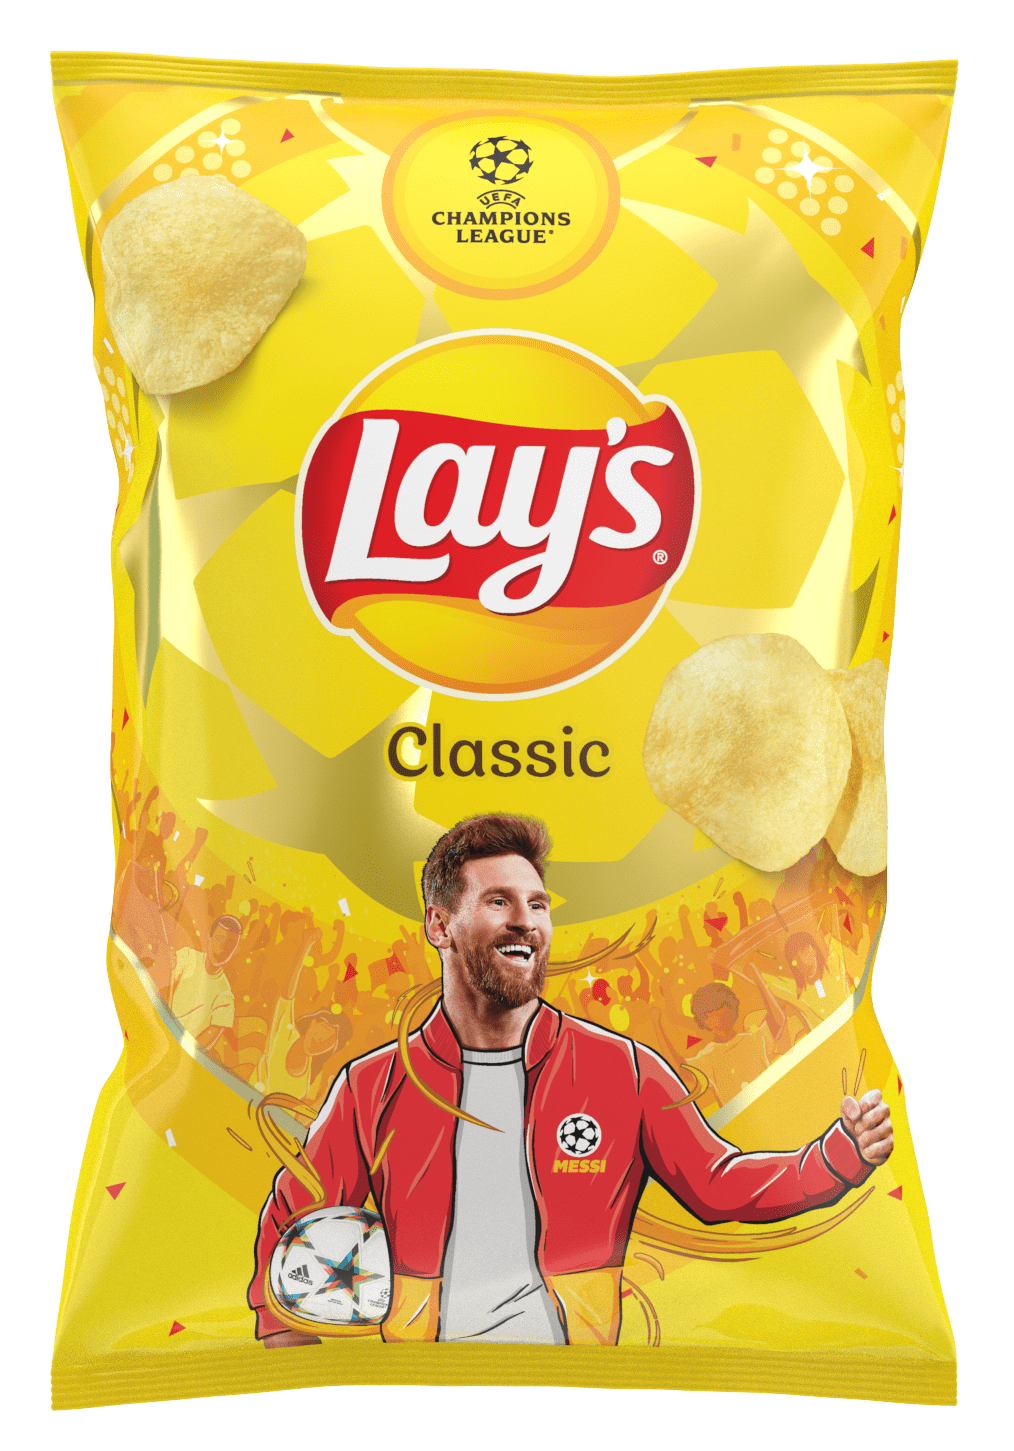 Frito Lay Marketing special edition